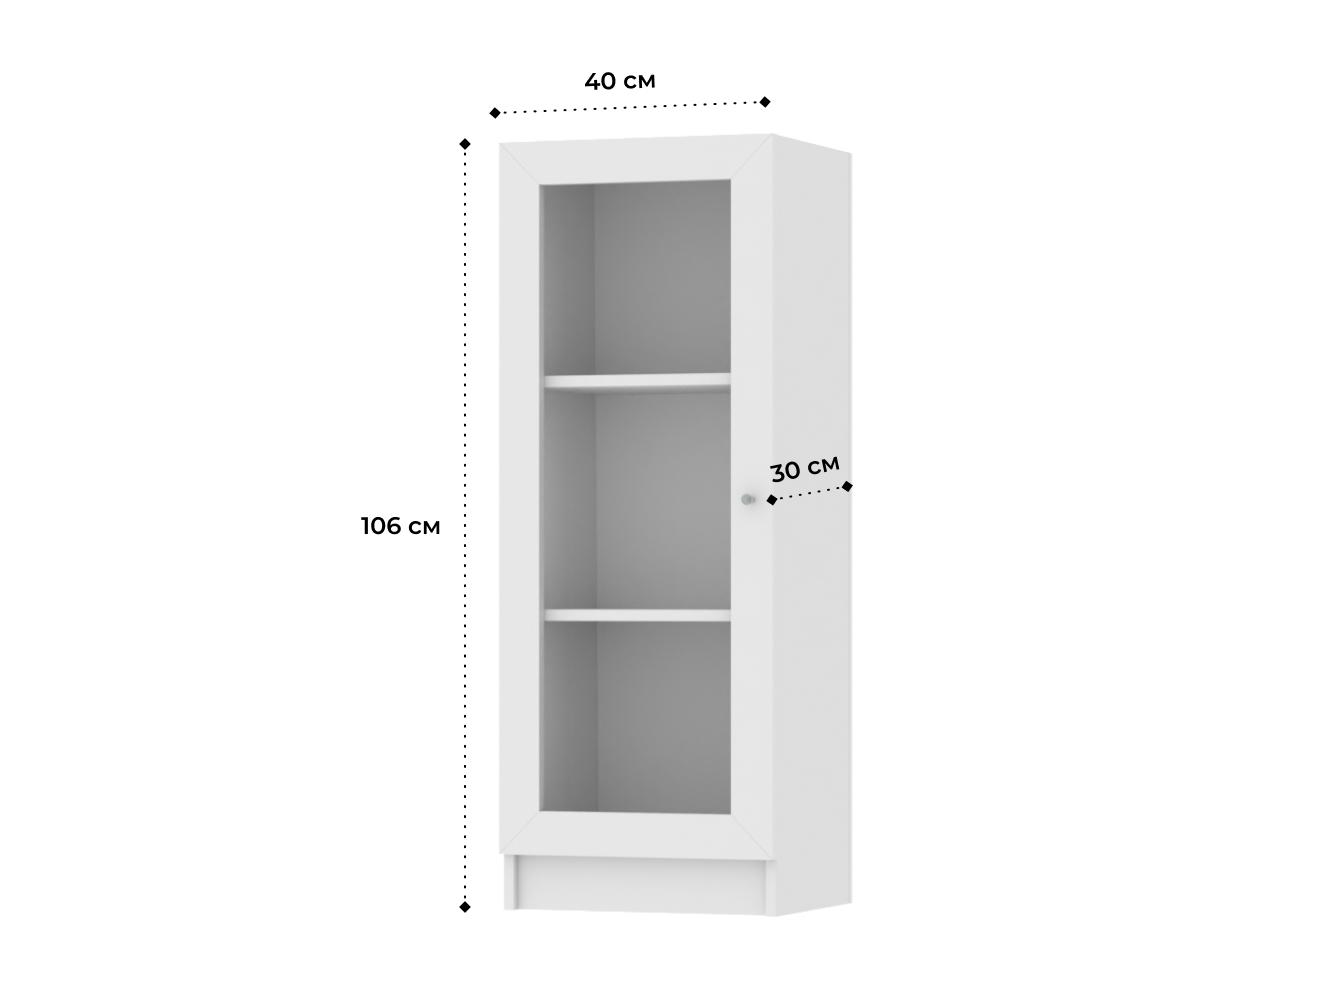 Книжный шкаф Билли 418 white ИКЕА (IKEA) изображение товара